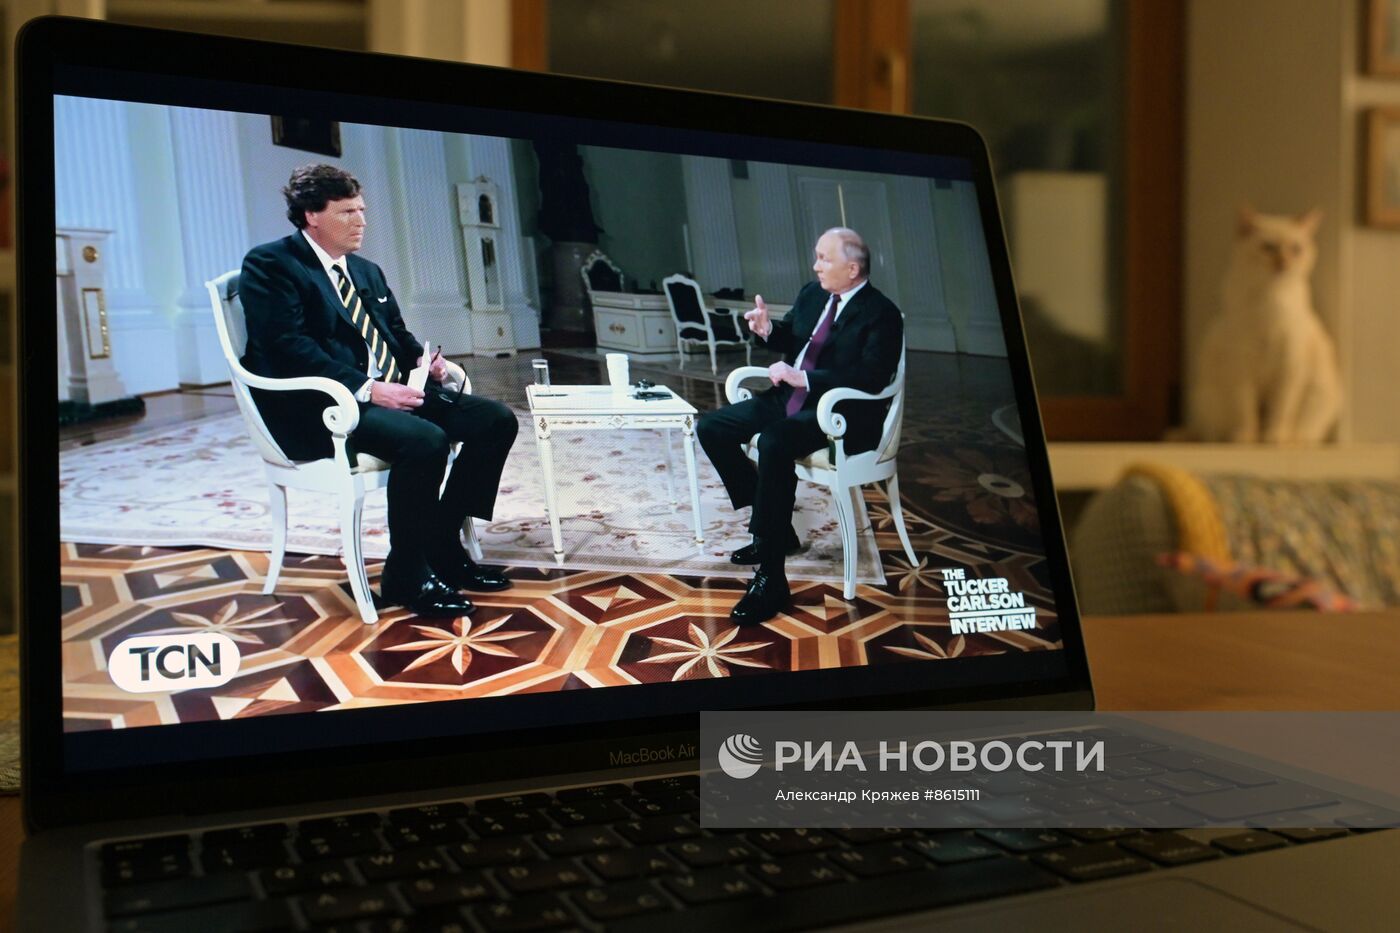 Трансляция интервью президента РФ Владимира Путина американскому журналисту Такеру Карлсону